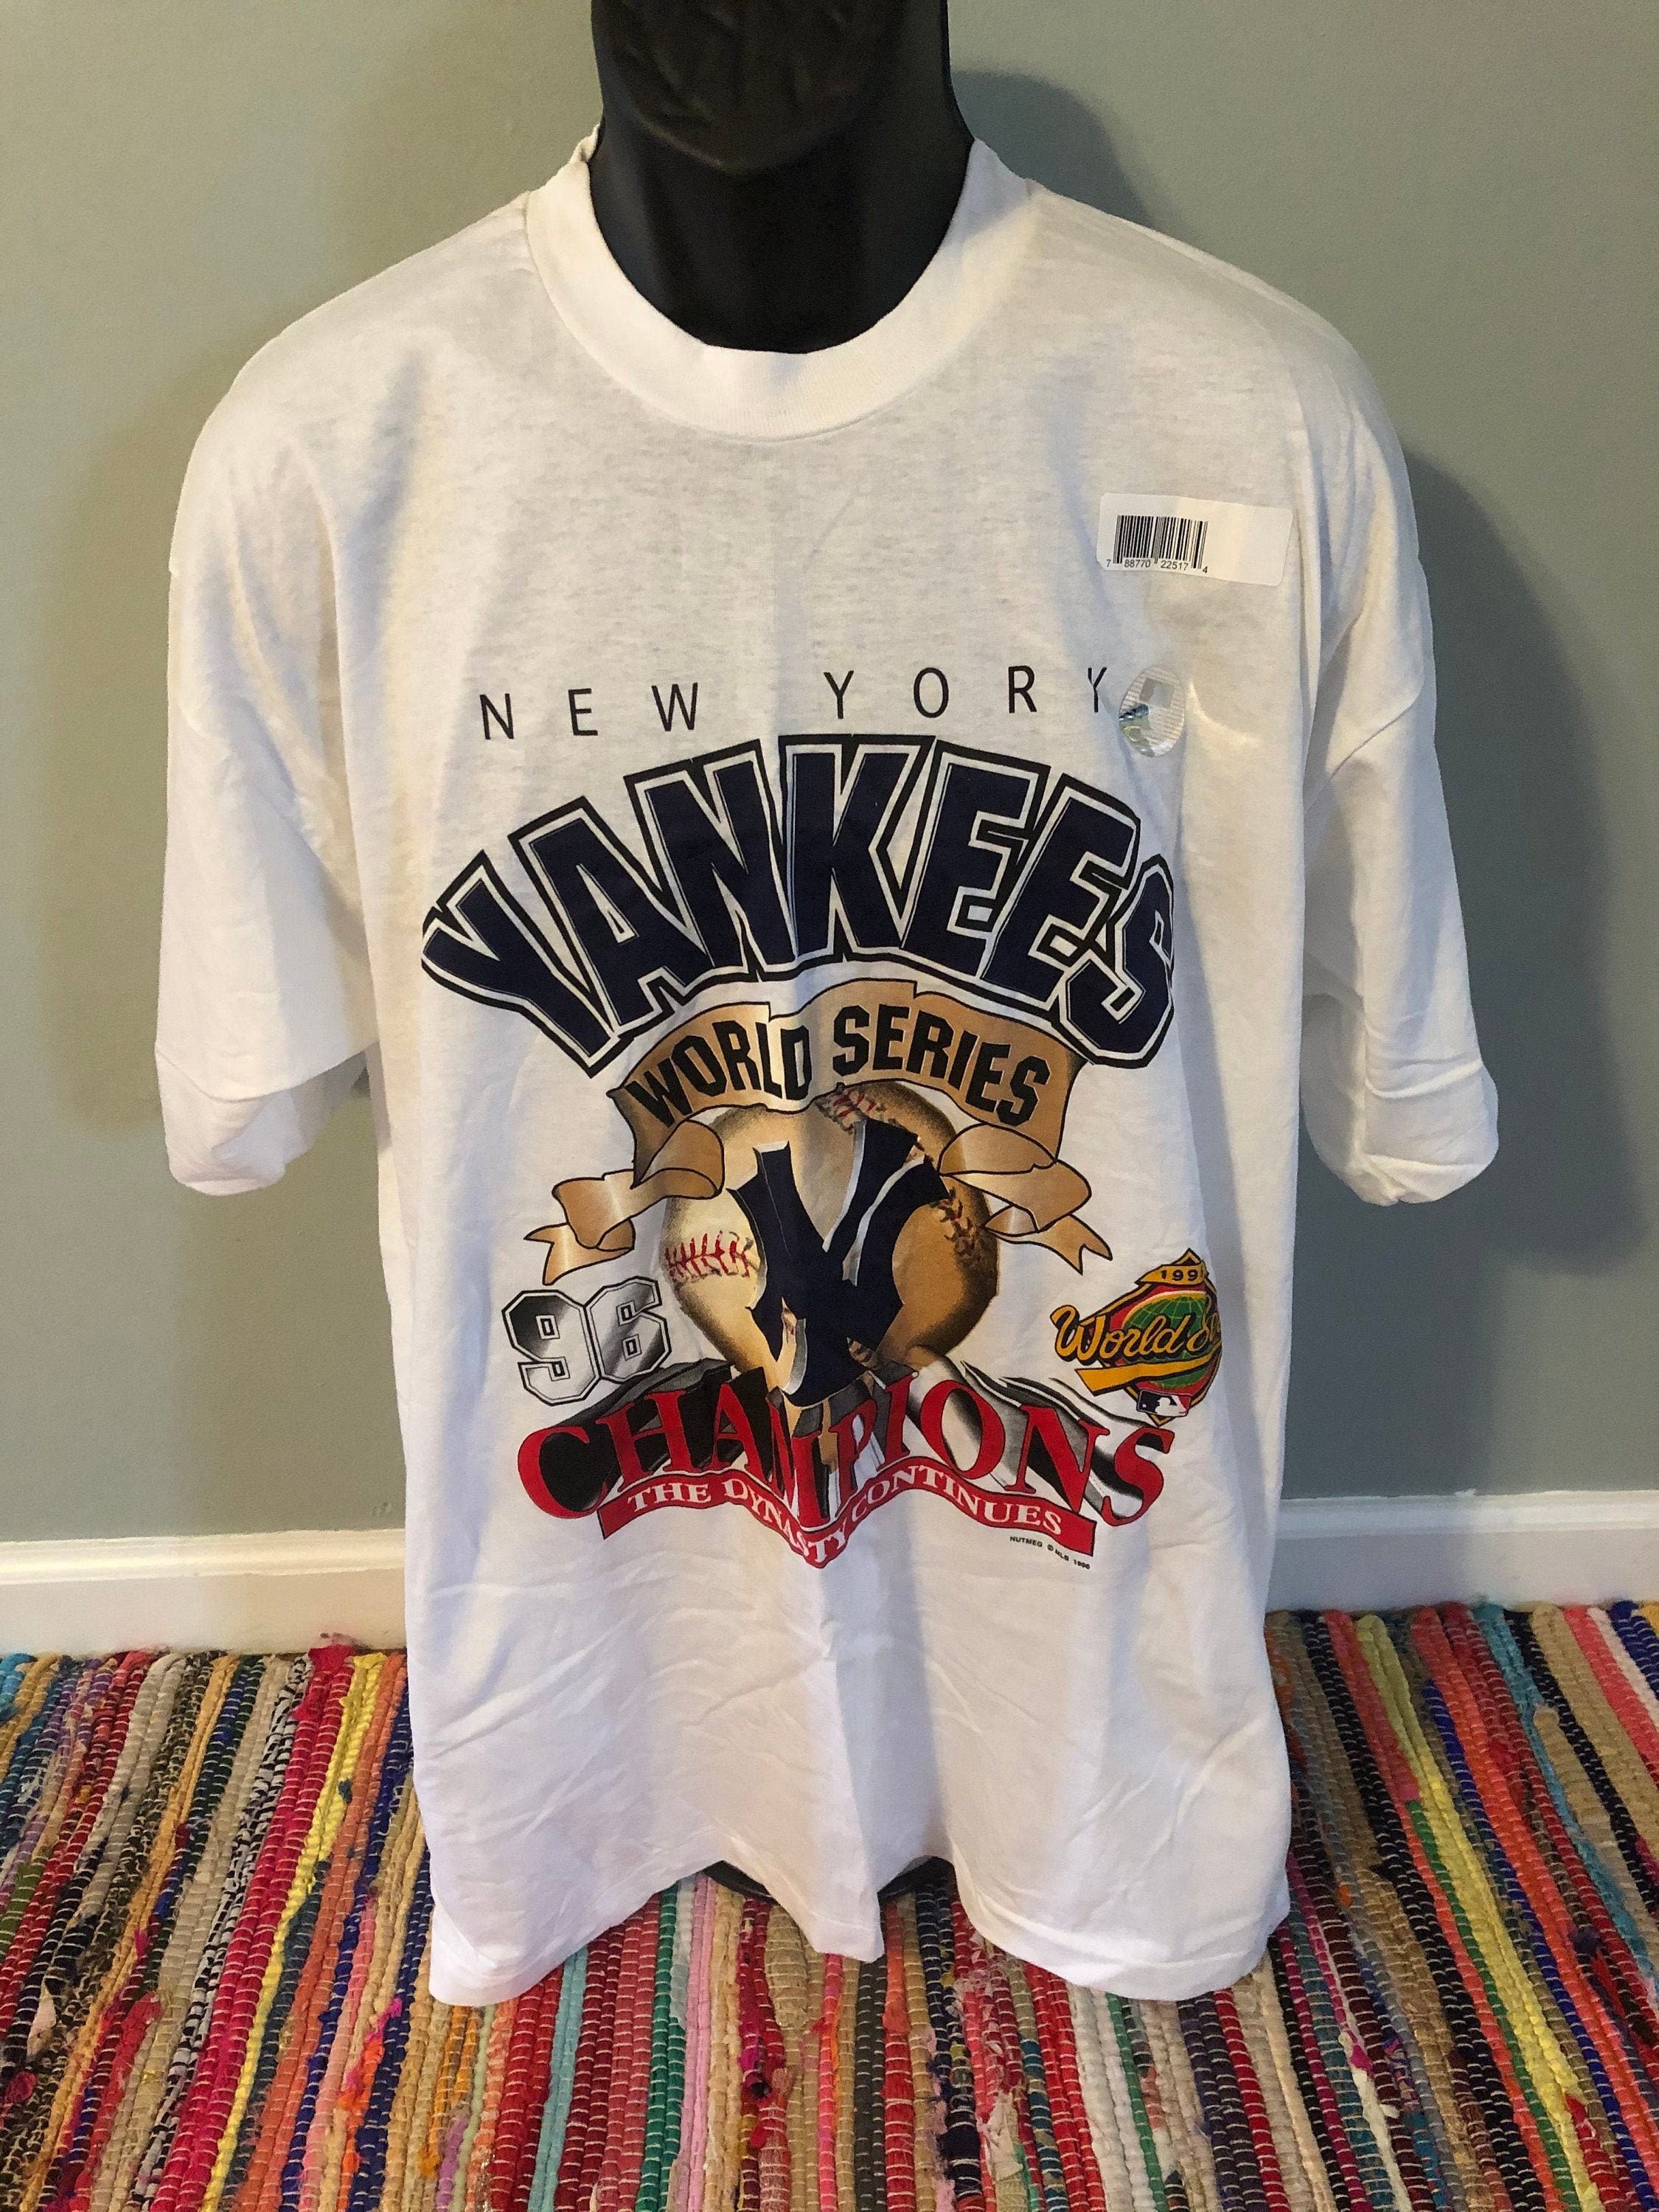 FutureVintageClothes 1996 New York Yankees World Series Champions Shirt Vintage 90s Tee Dynasty Continues MLB Baseball Nutmeg Screen Stars Deadstock XL